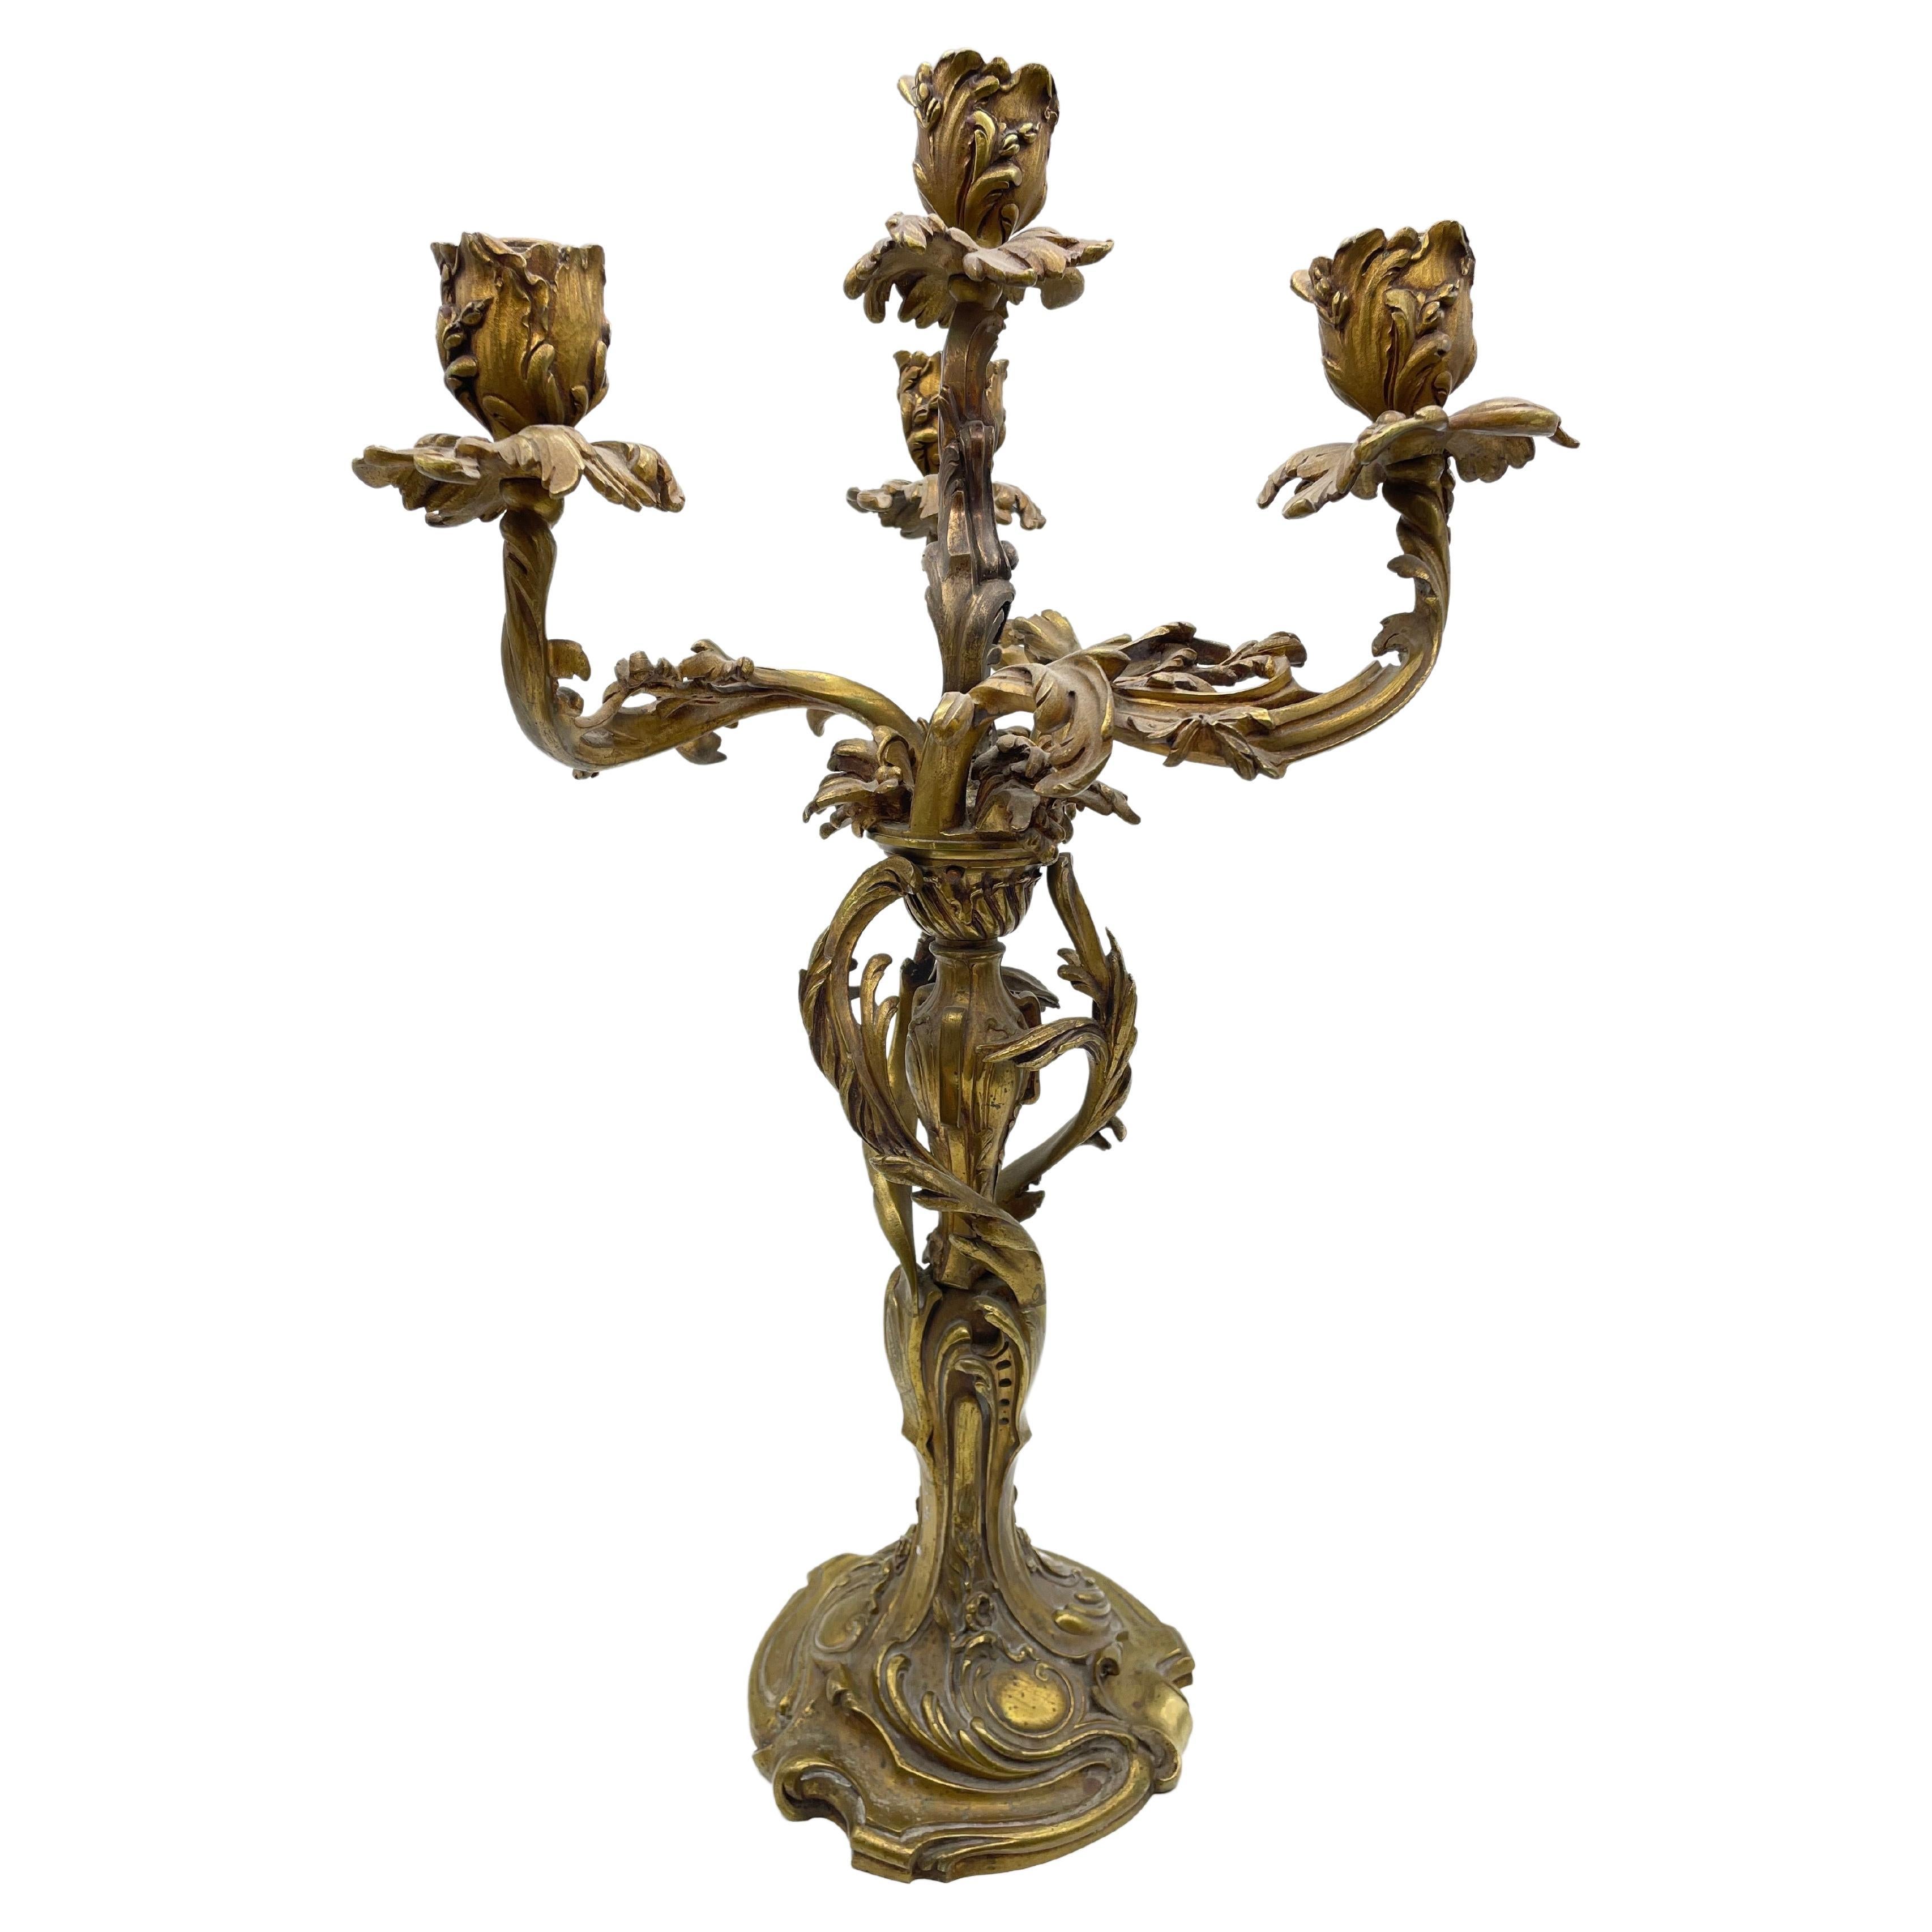 Antique bronze rococo candlestick from around 1880